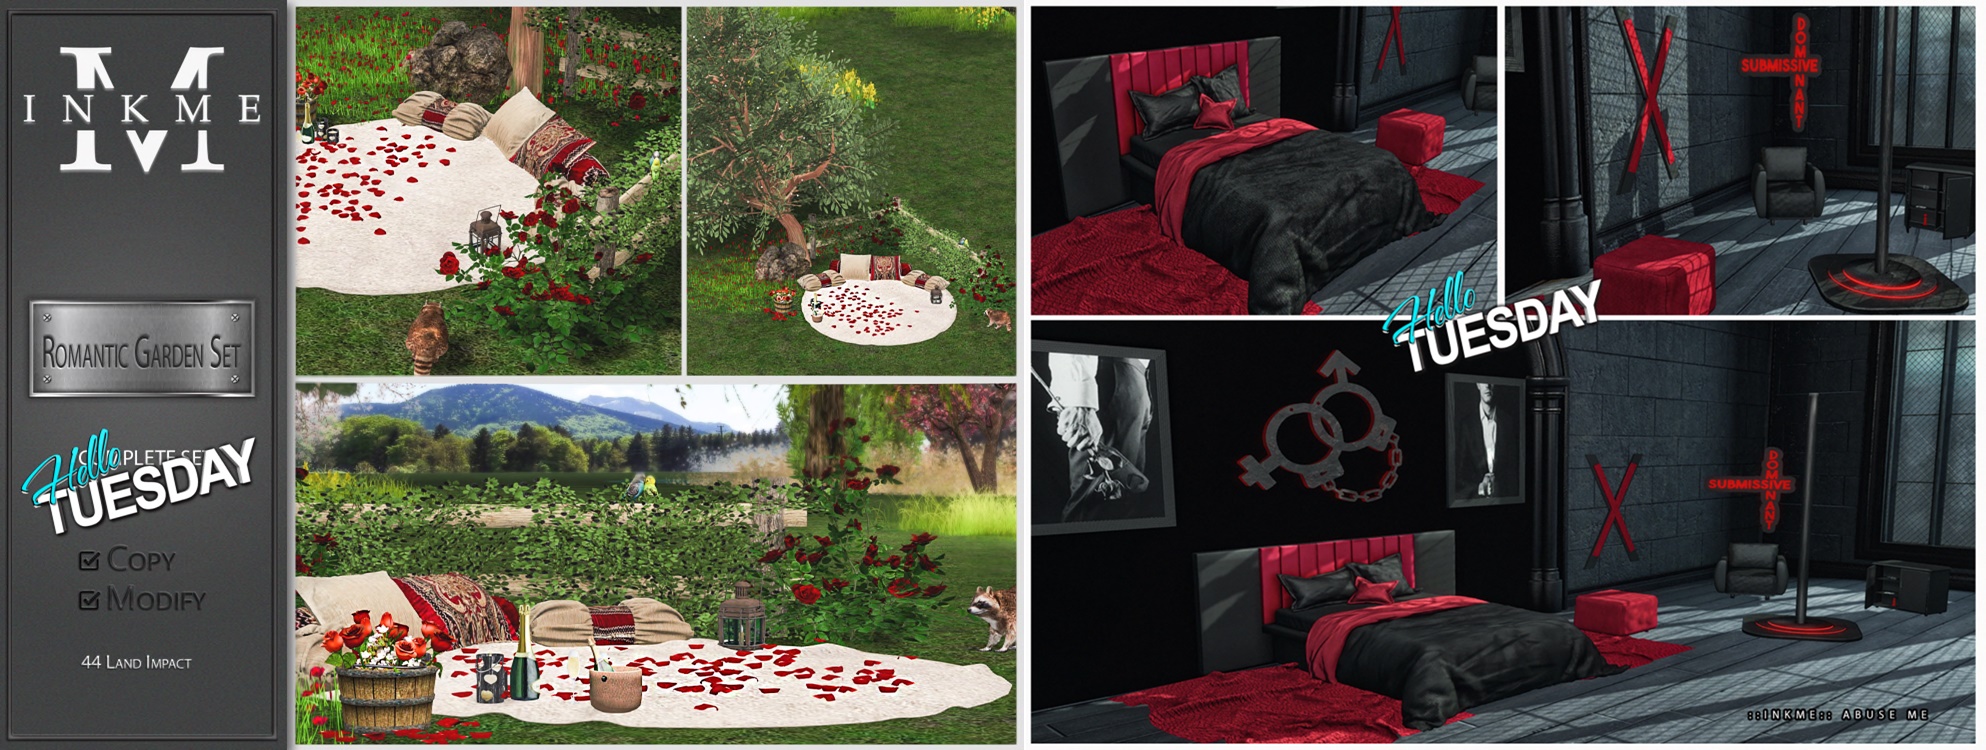 InkMe – Romantic Garden Set & An Adult Set